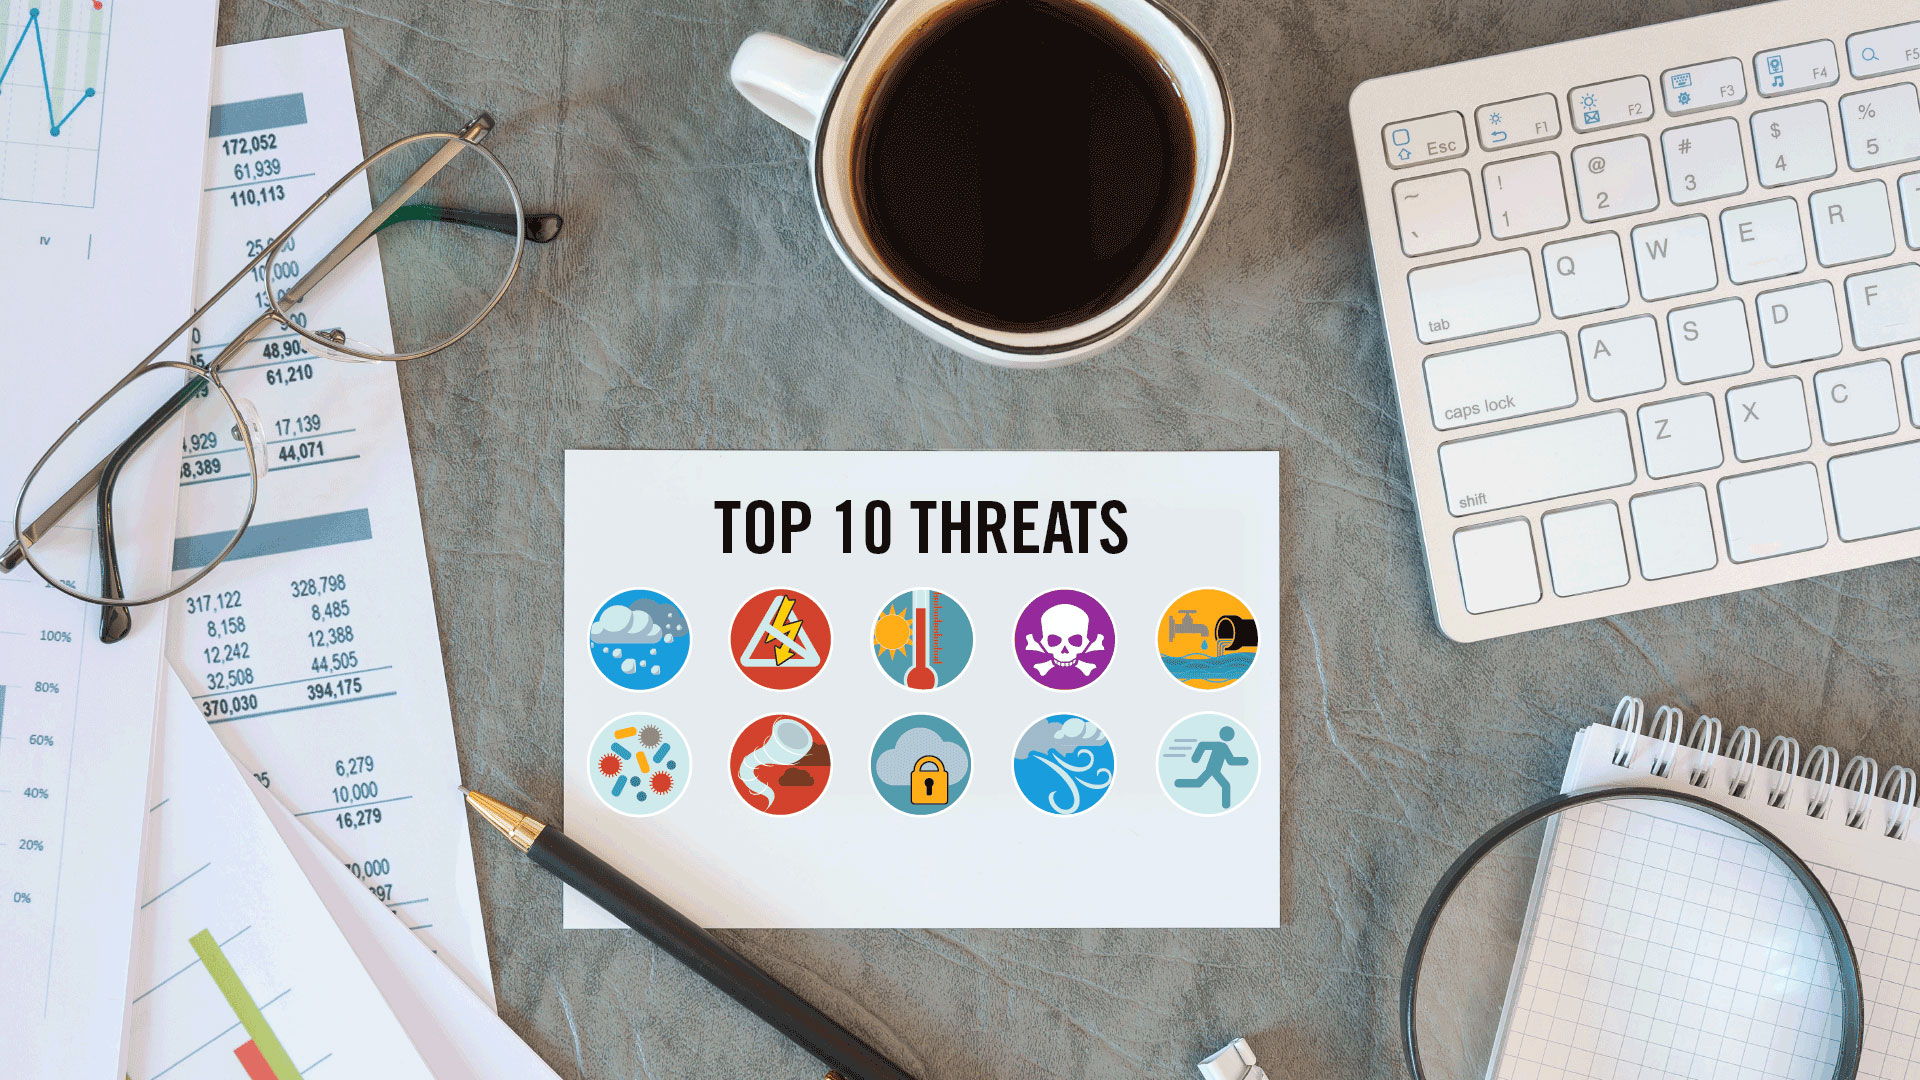 Top 10 Threats